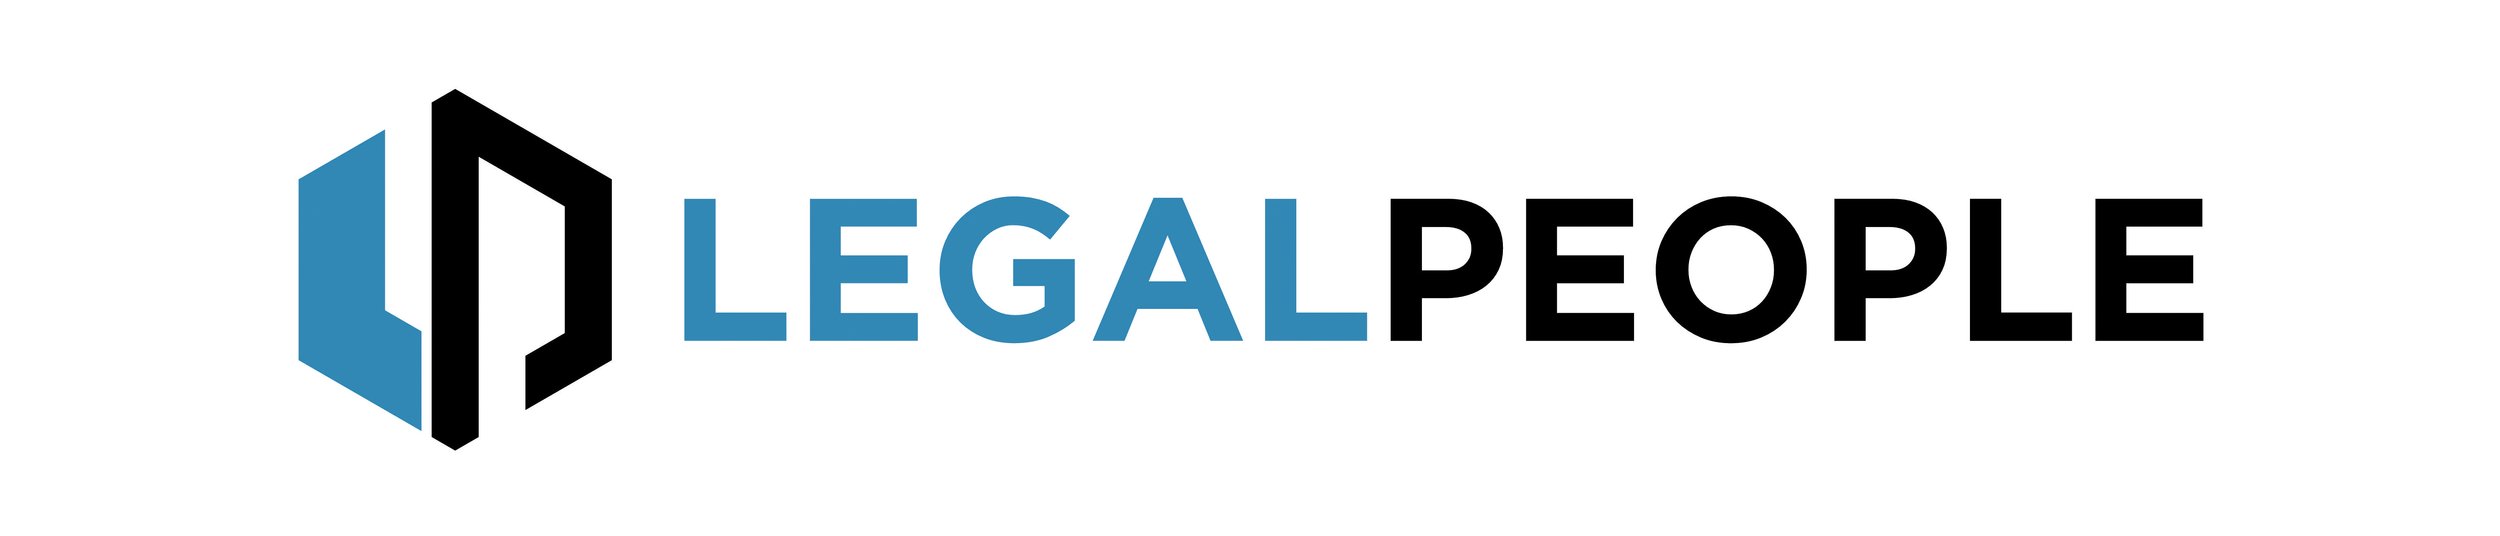 Legalpeople Logo-updated.jpg